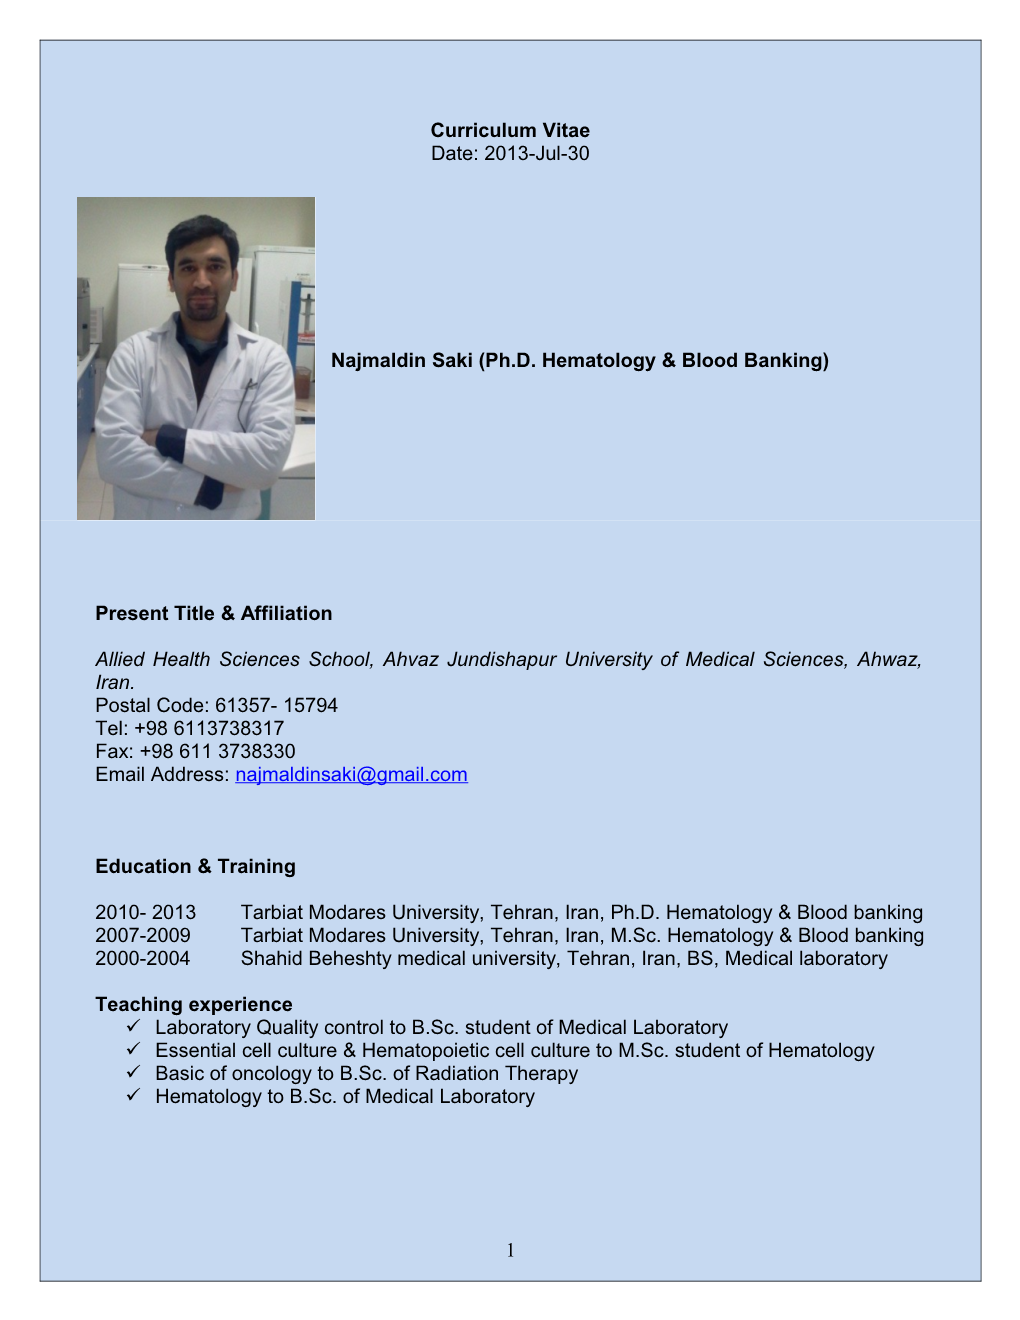 Najmaldin Saki (Ph.D. Hematology & Blood Banking)